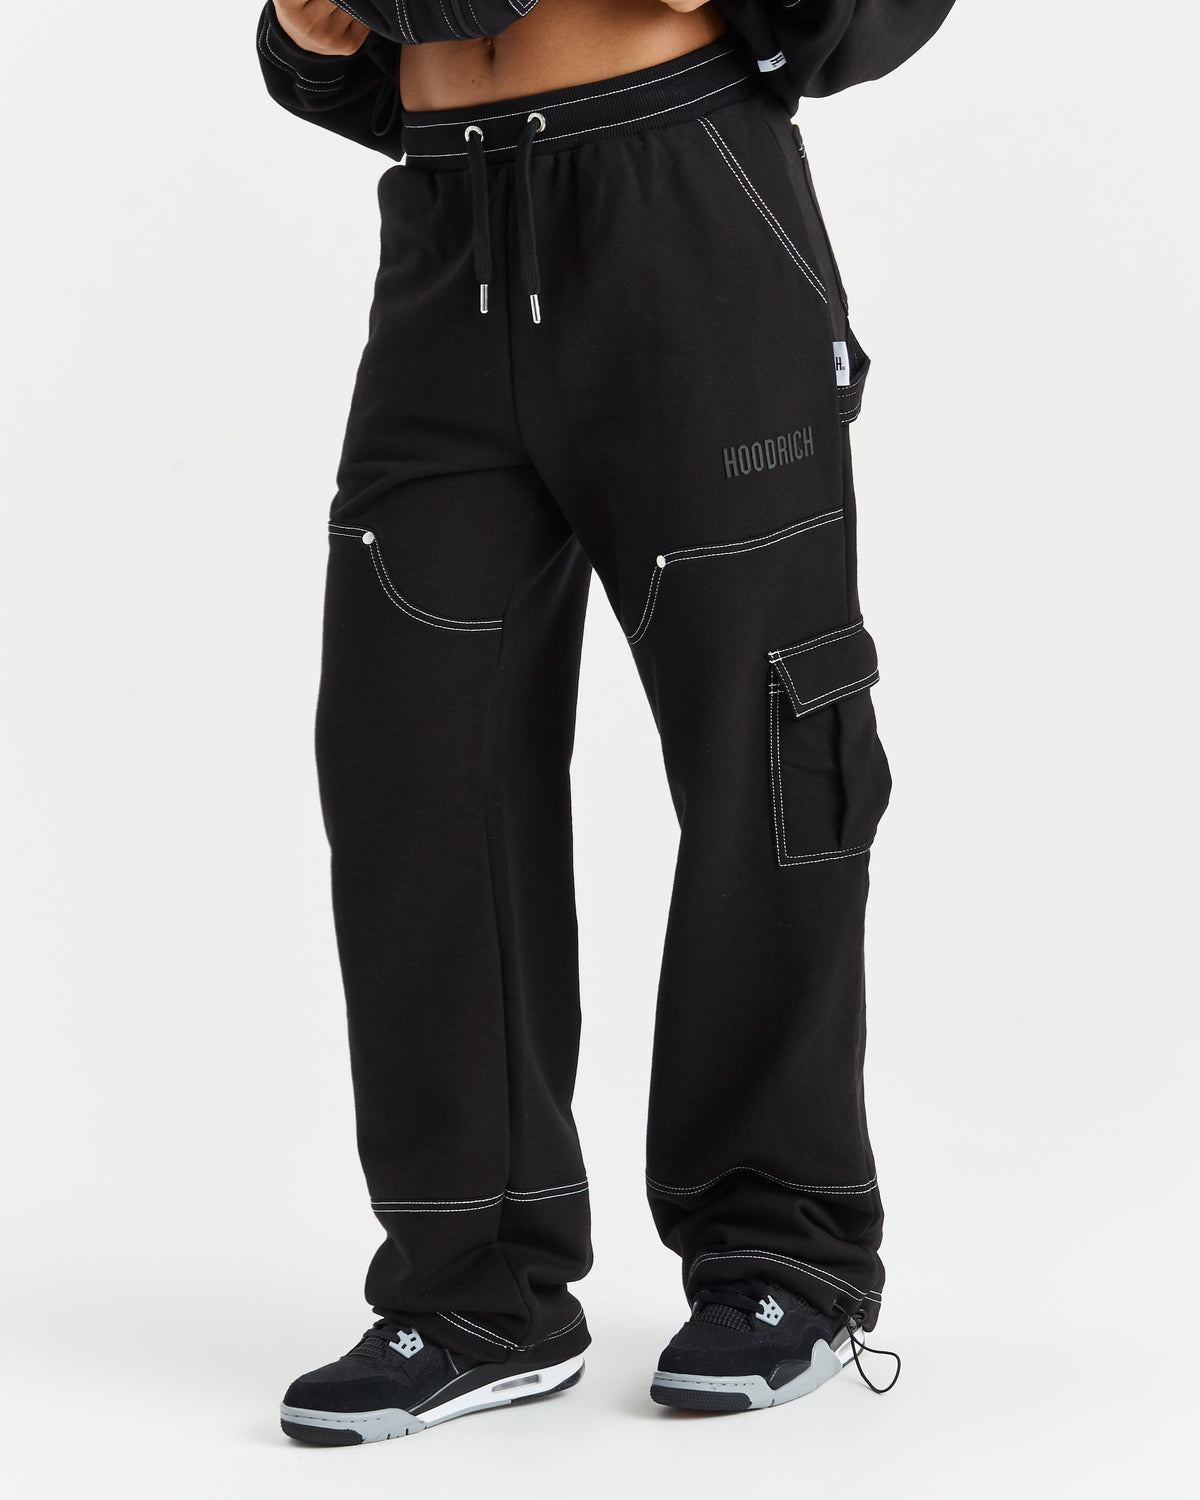 GetUSCart- Oalka Women's Joggers High Waist Yoga Pockets Sweatpants Sport  Workout Pants Drawstring Multi Camo Grey XL